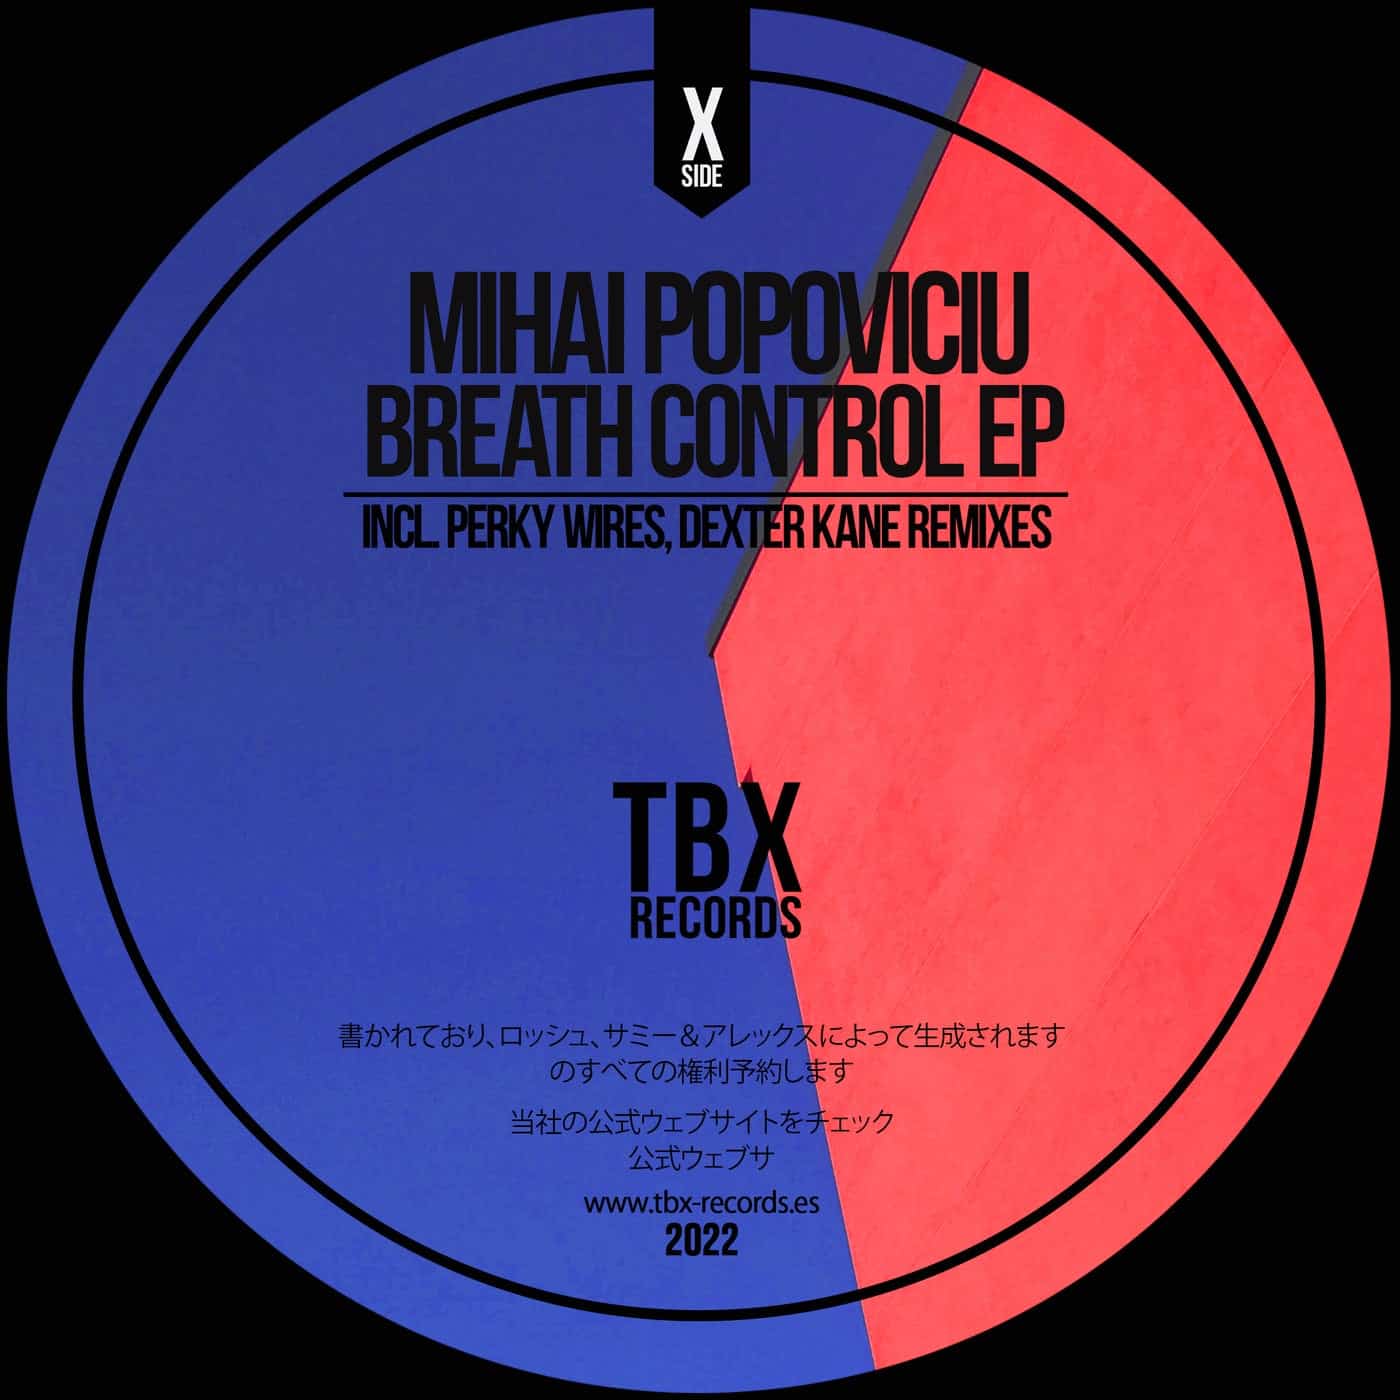 Download Mihai Popoviciu - Breath Control EP on Electrobuzz